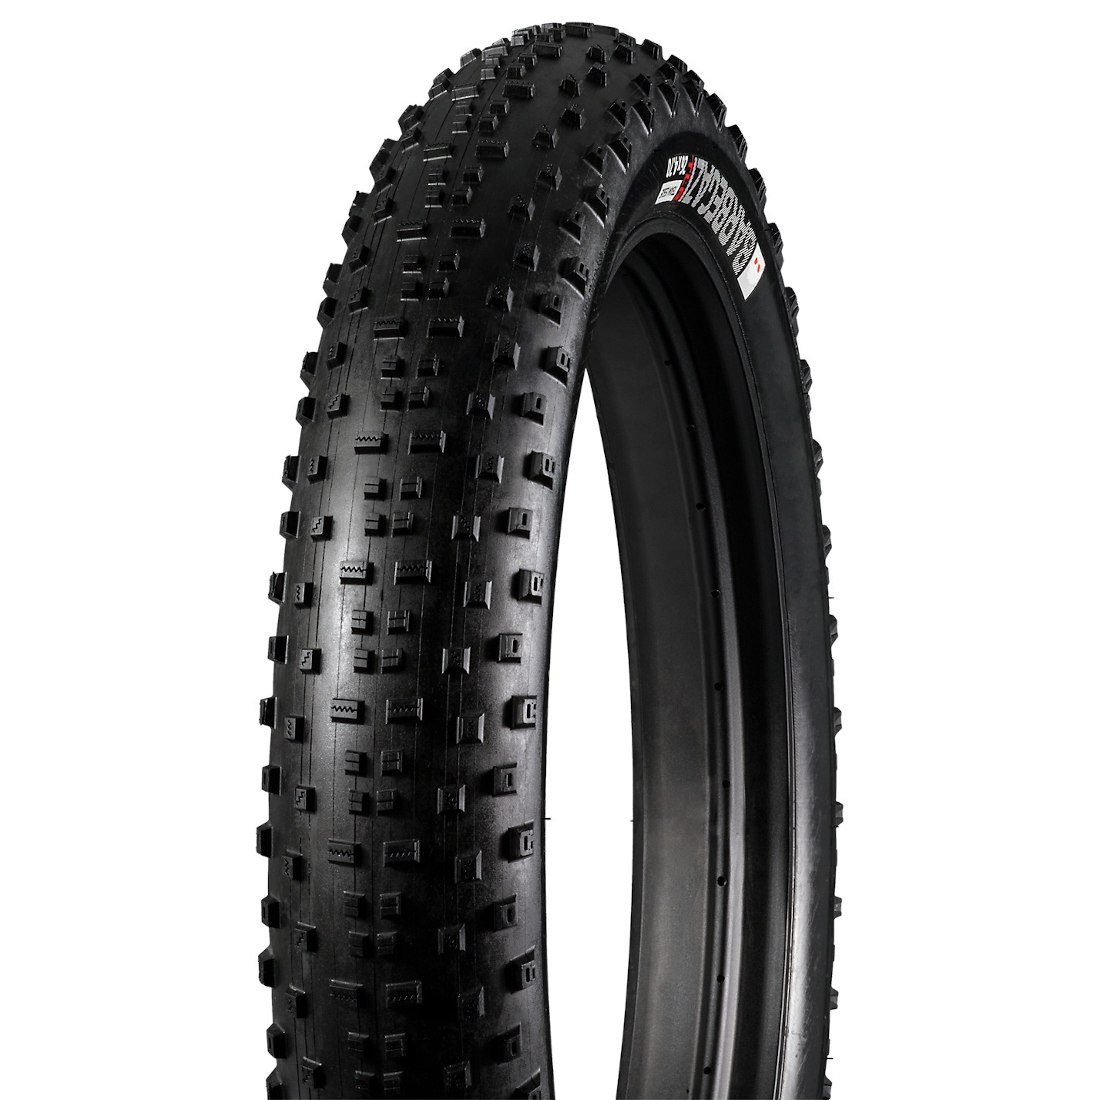 Productfoto van Bontrager Barbegazi Fat Bike TLR Folding Tire 27.5x4.50 Inches